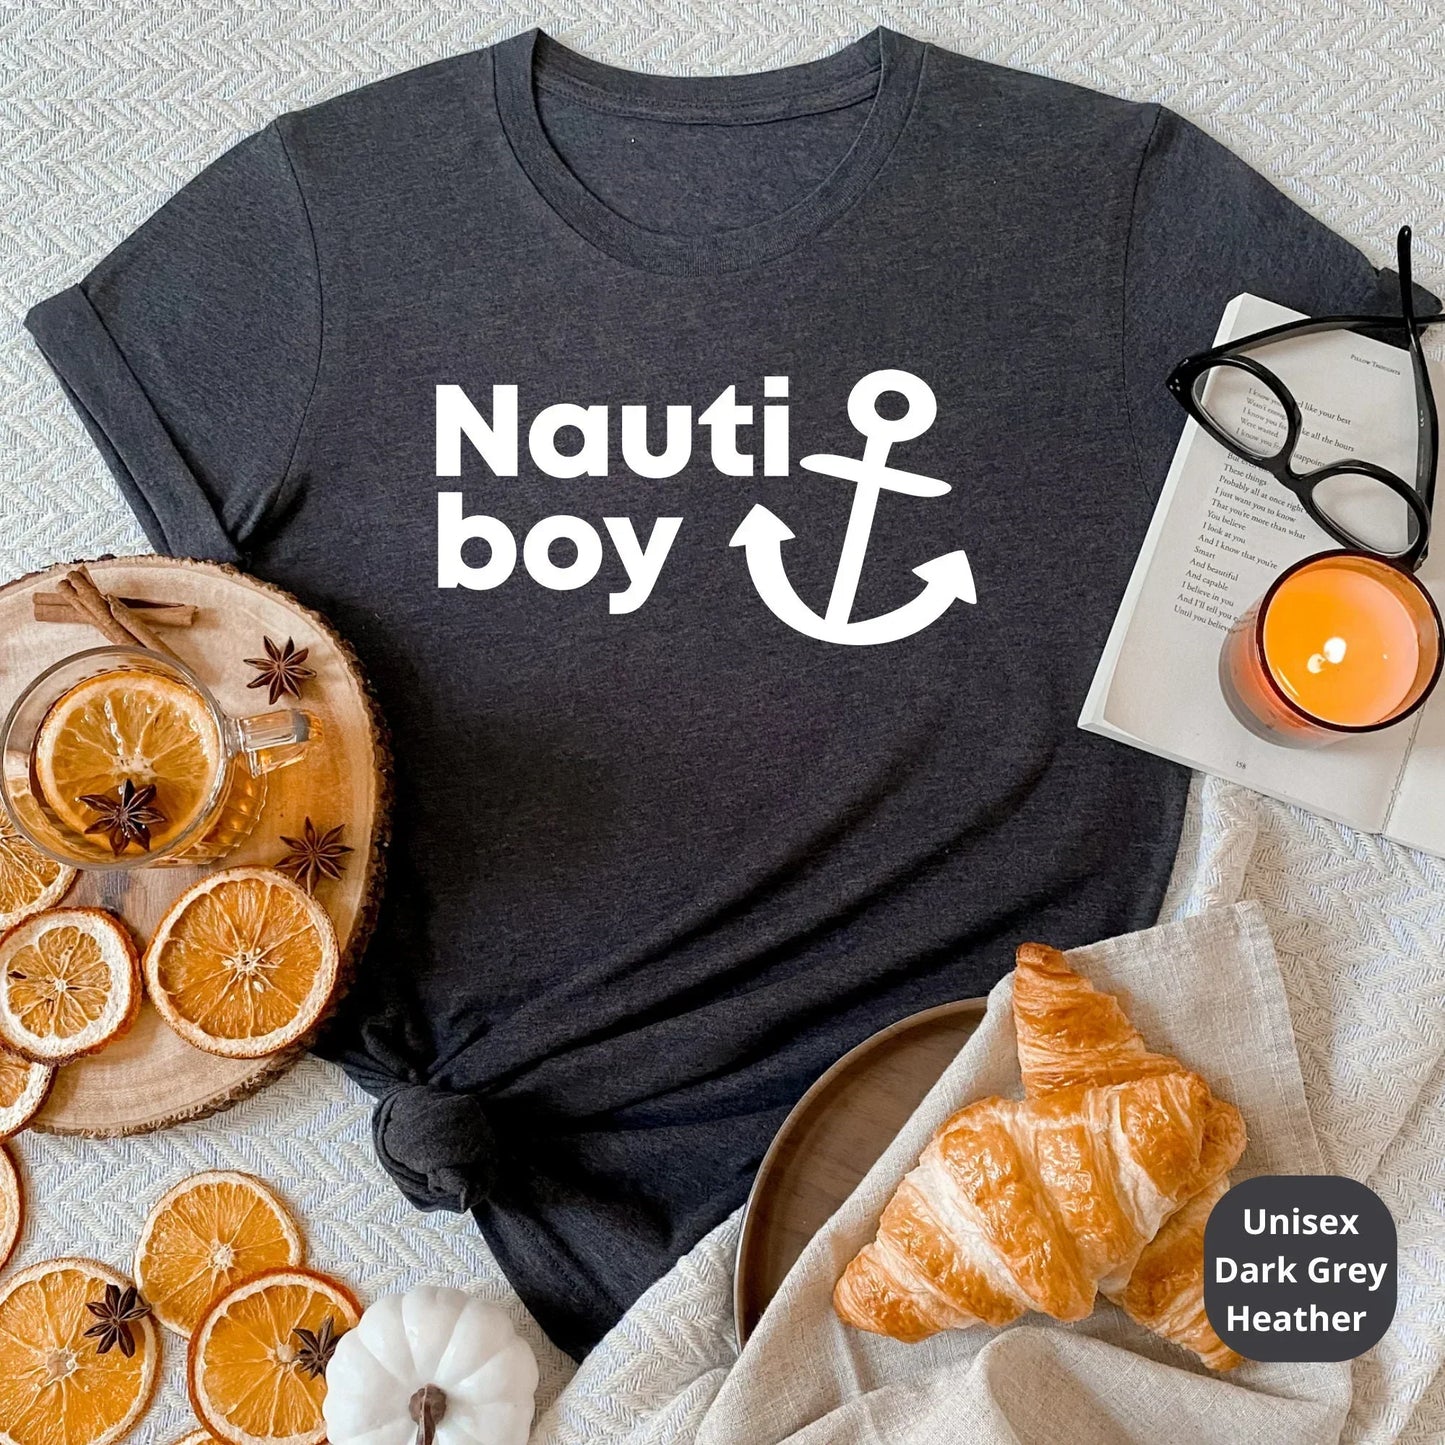 Nauti Boy & Nauti Girl Couples Cruise Shirts HMDesignStudioUS